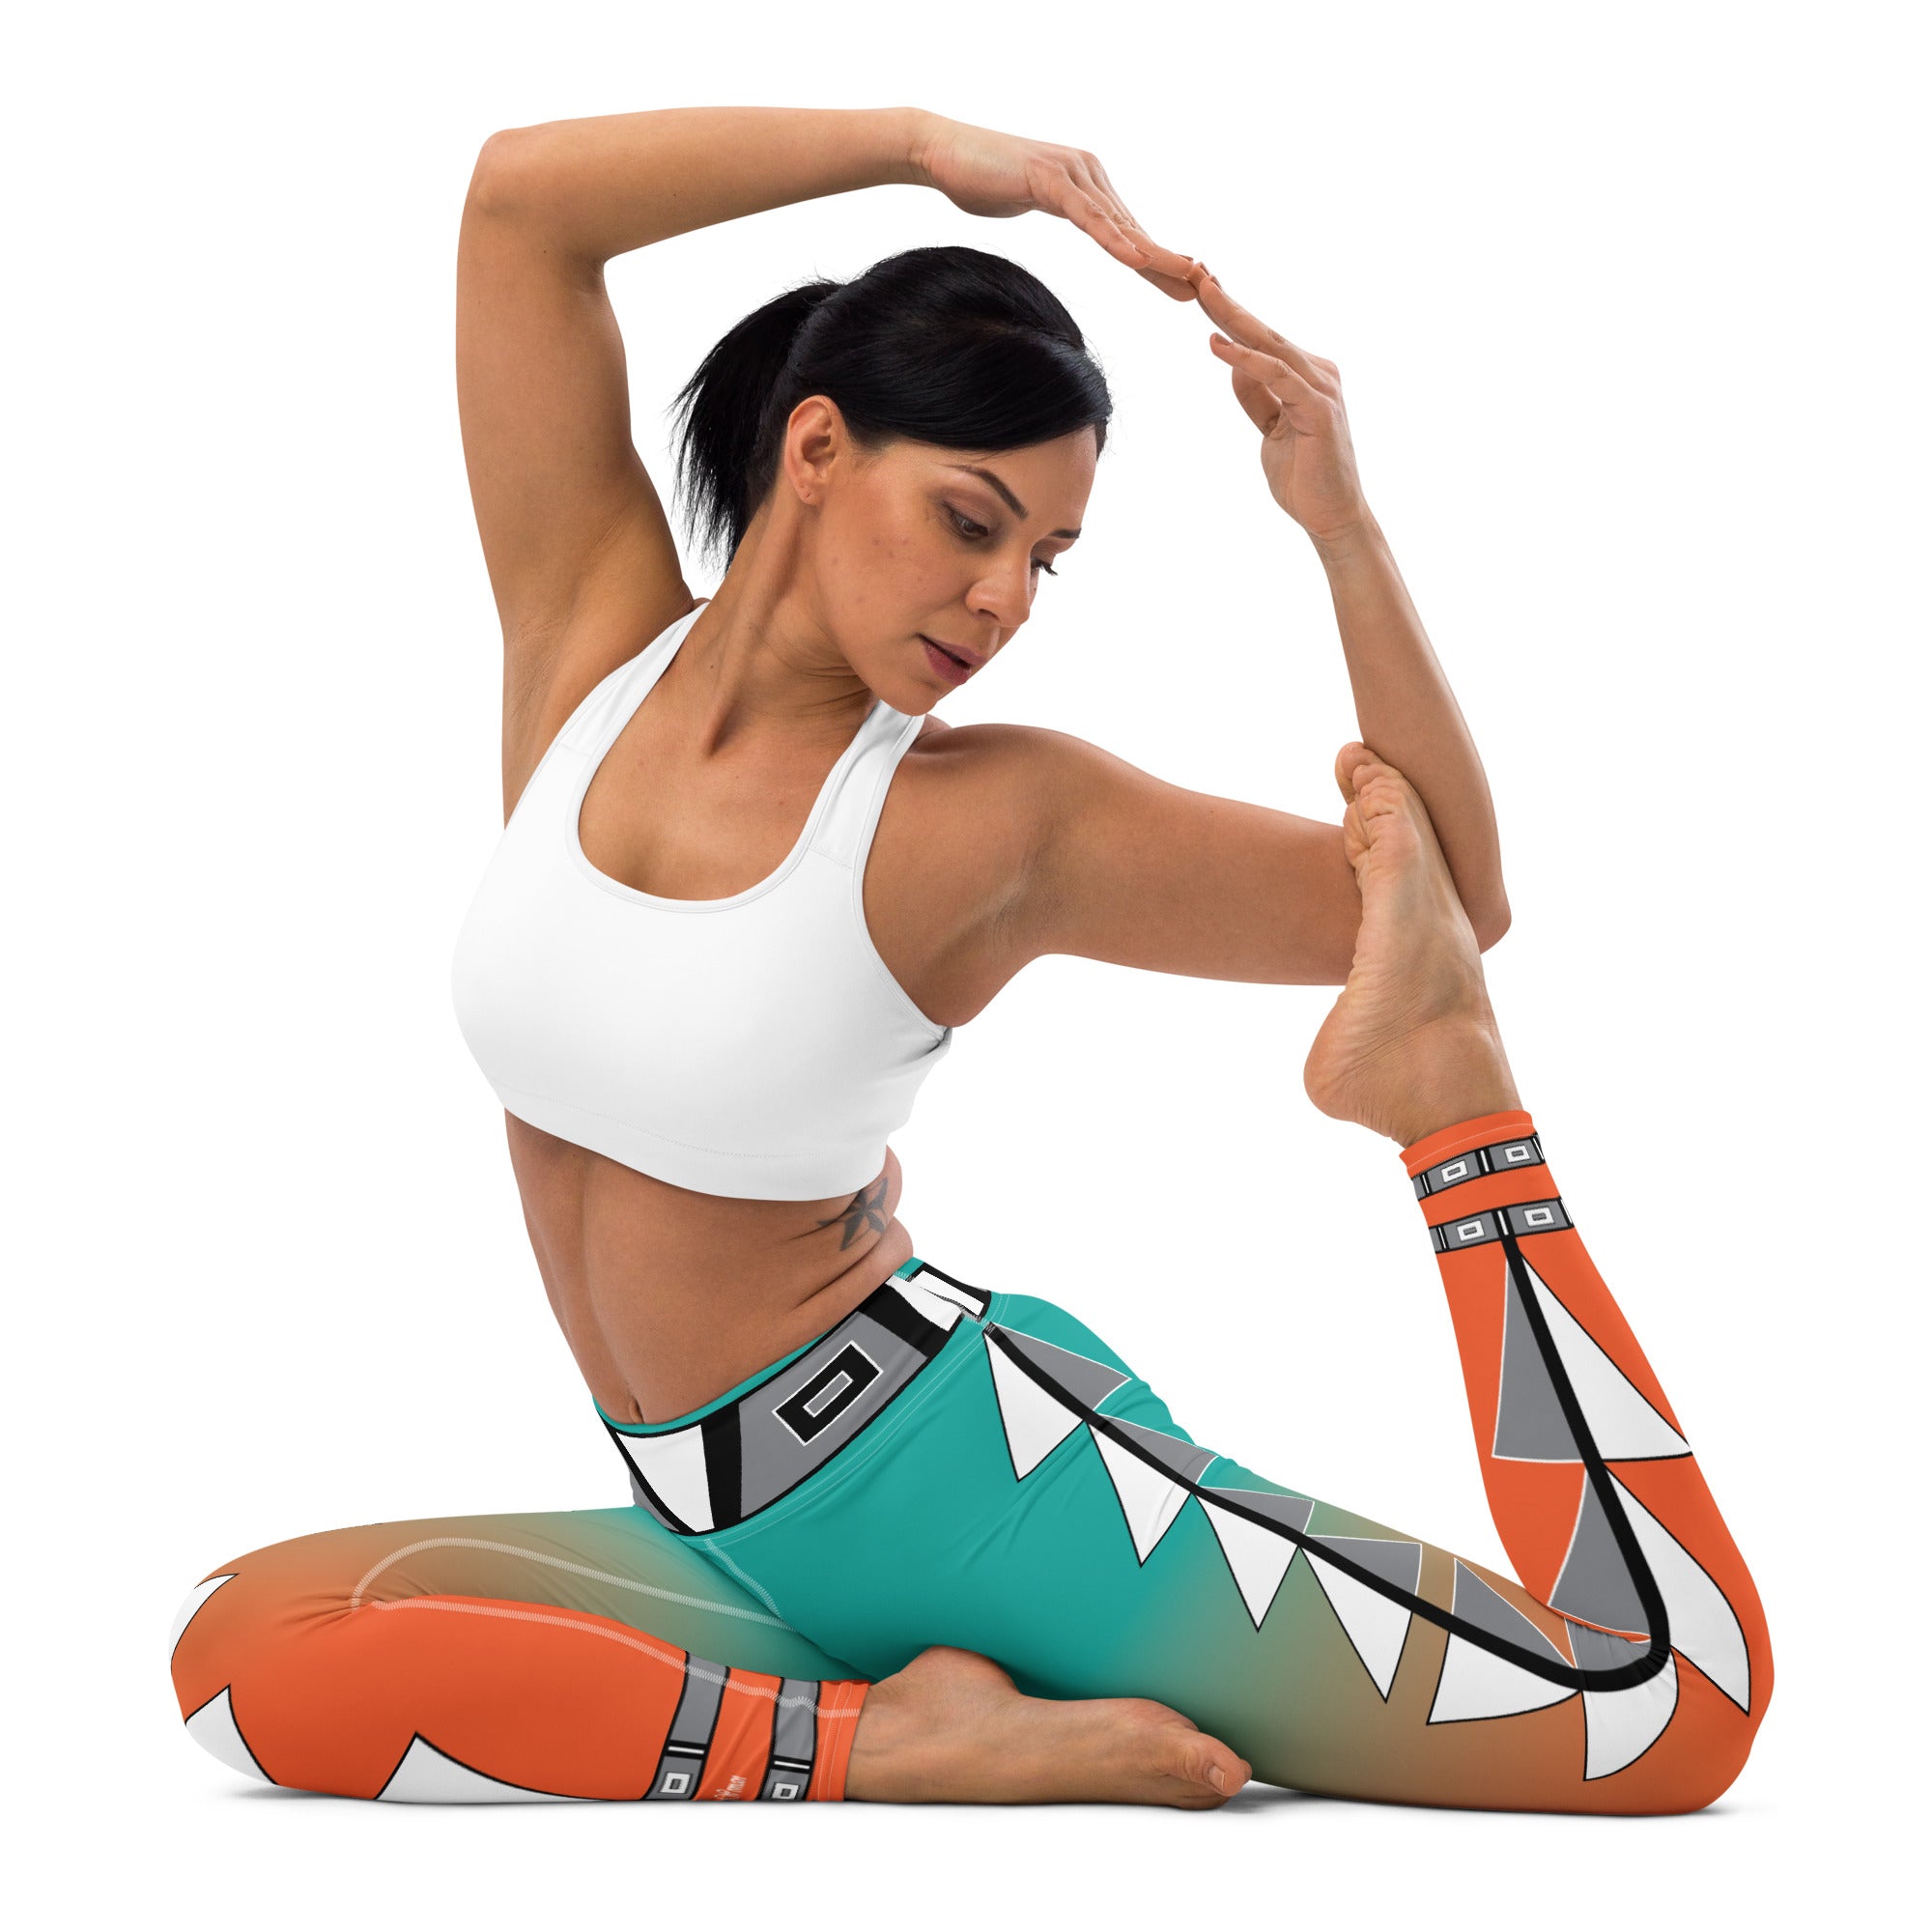 Centered Turquoise and Orange Fade Yoga Leggings